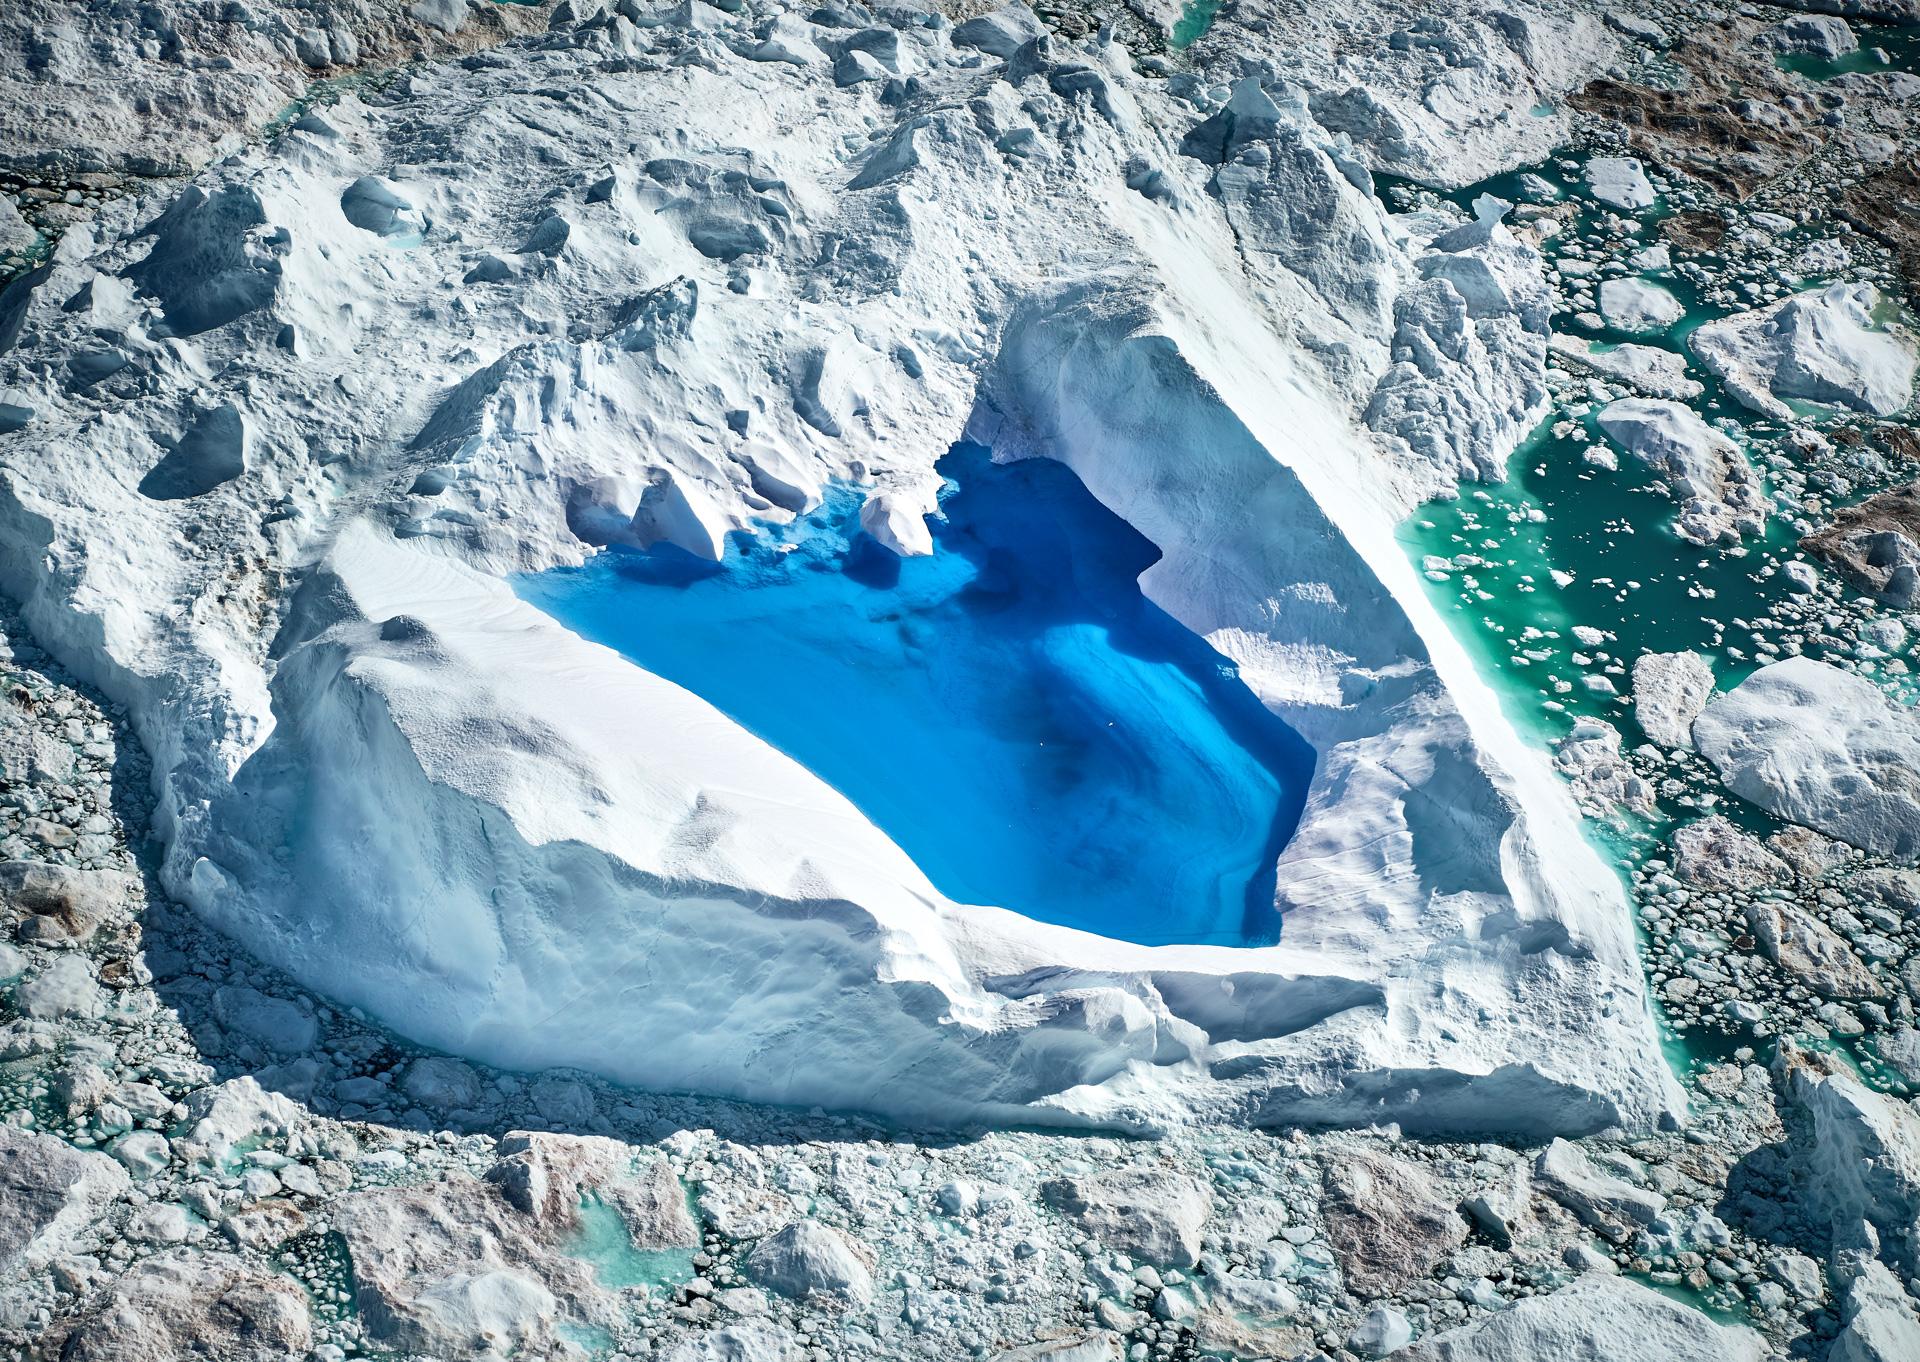 New York Photography Awards Winner - Wonderfull Glacier